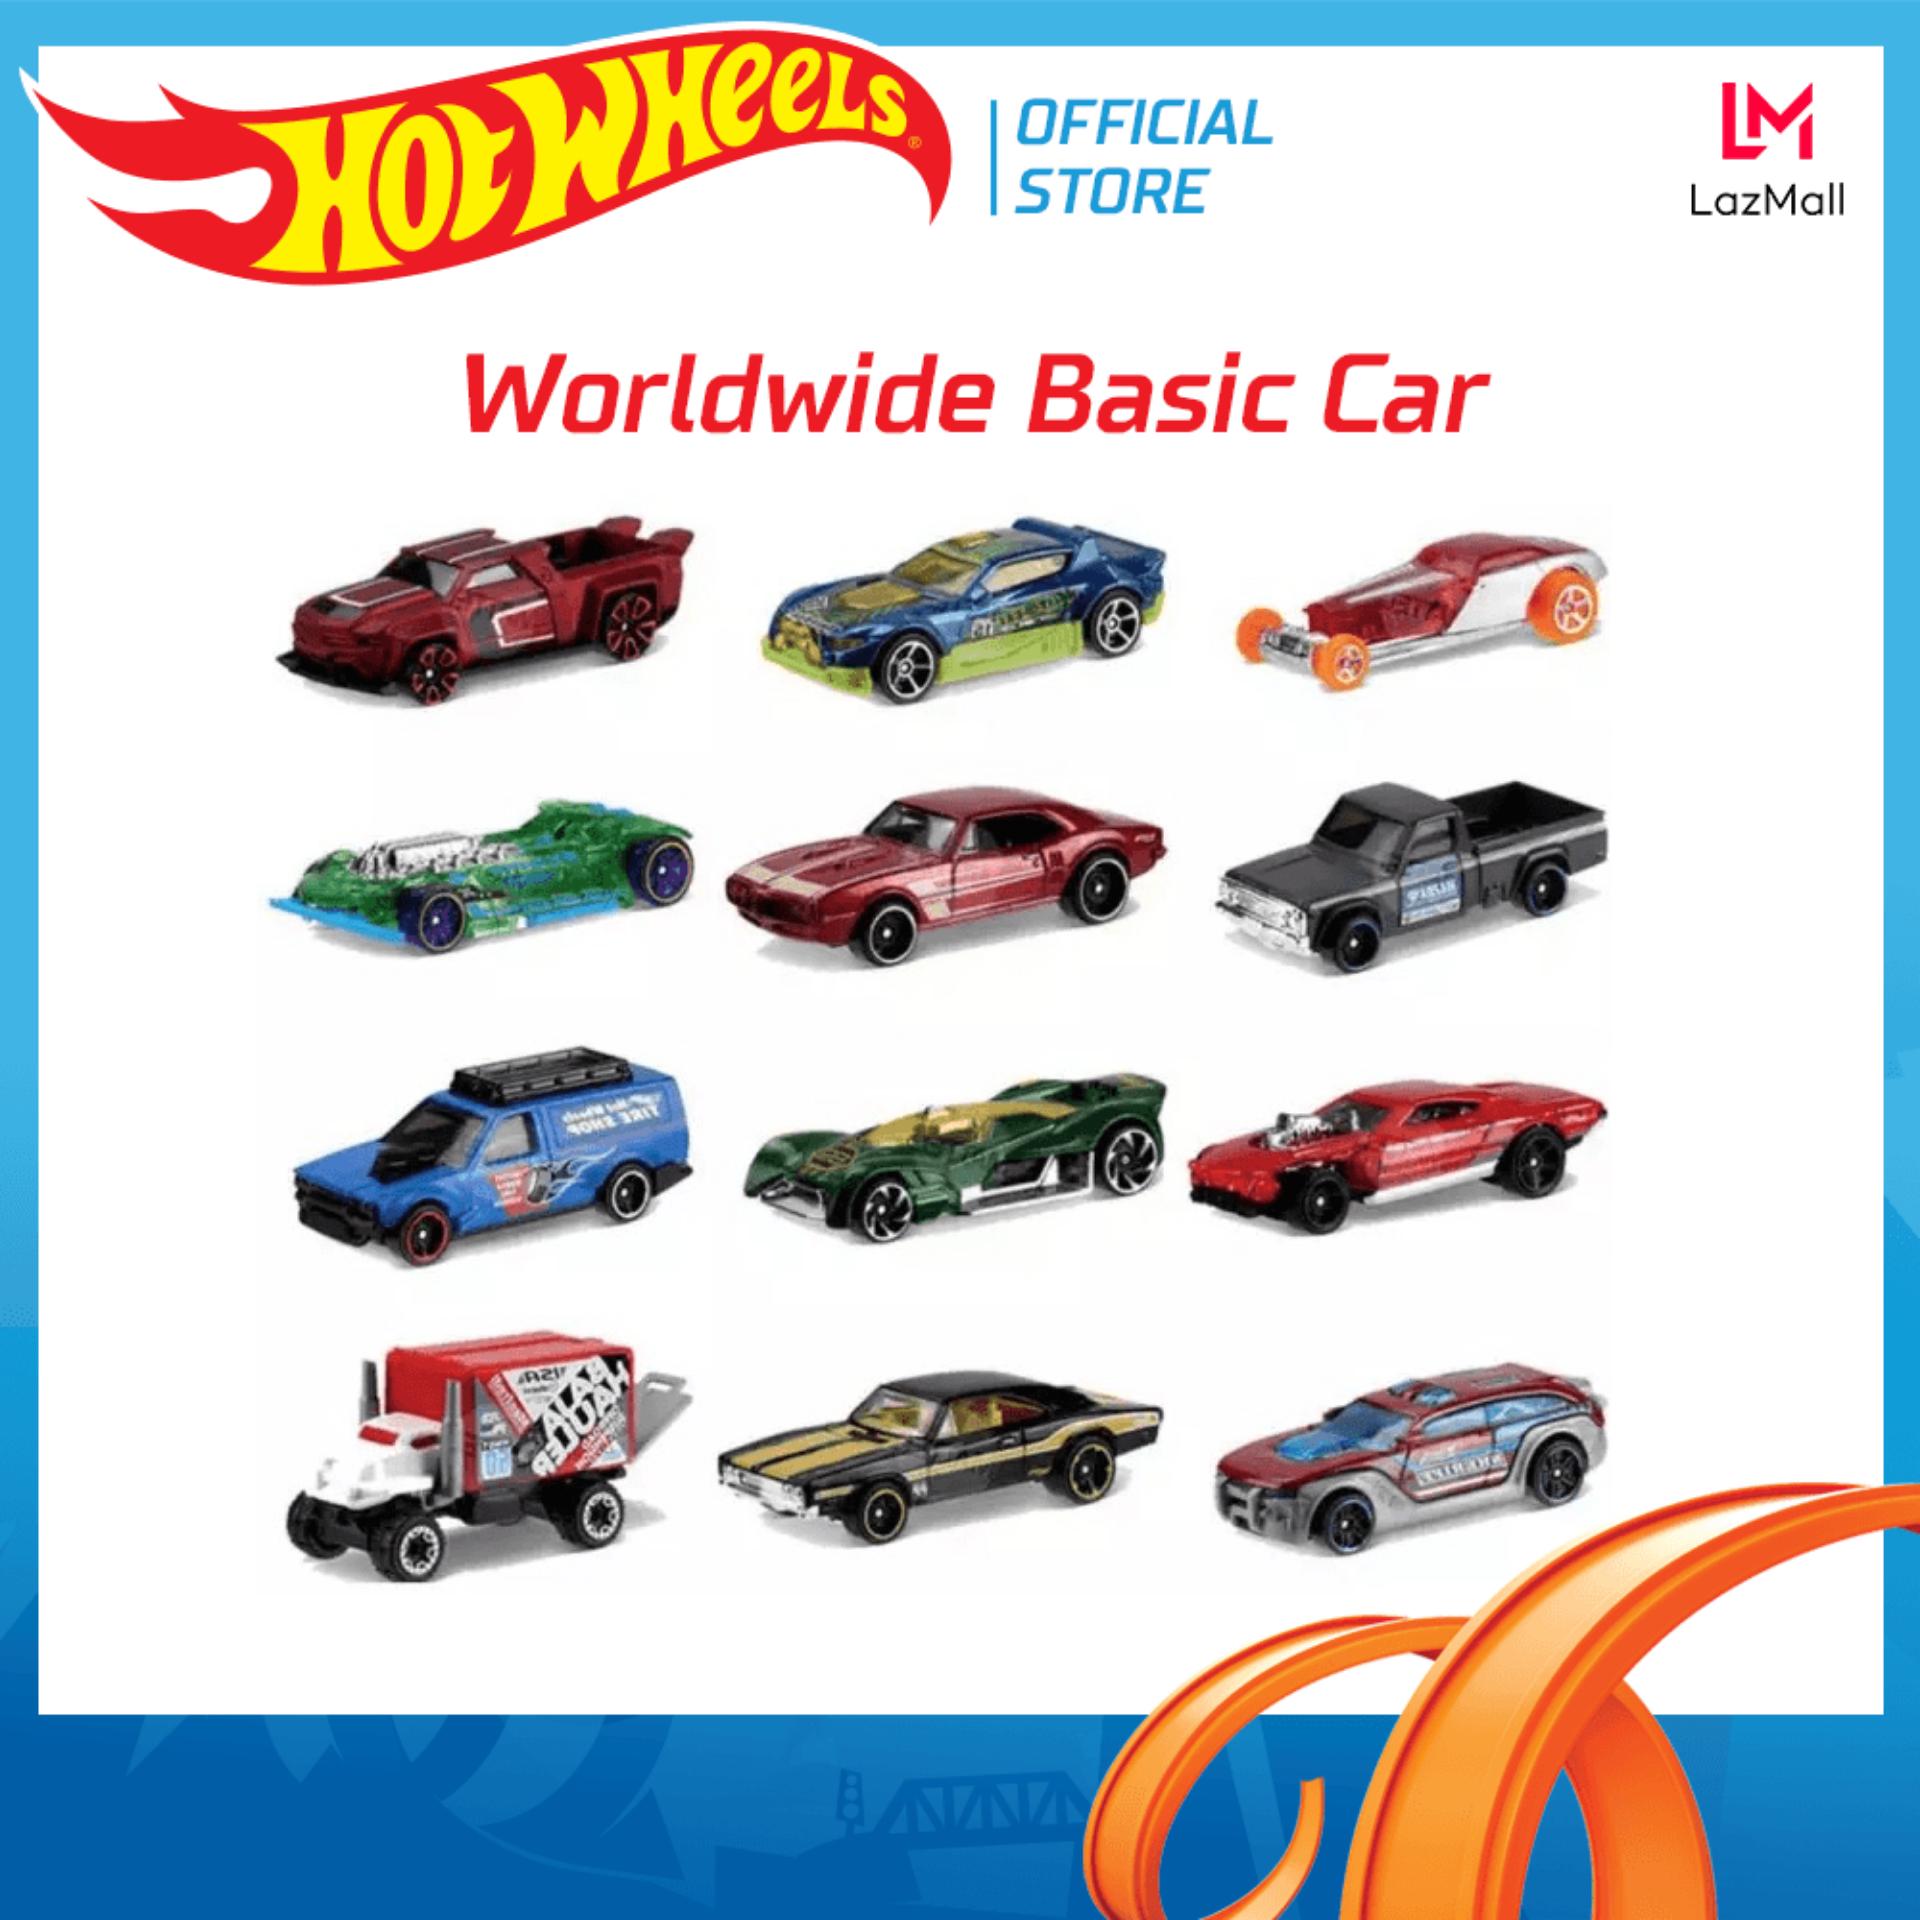 Hot Wheels รถ ฮ็อทวีล 1 คัน Worldwide Basic Car C4982 โมเดลรถ พาหนะจำลอง ของเล่นสะสม รถของเล่น ของเล่น ของเล่นเด็ก3ขวบ